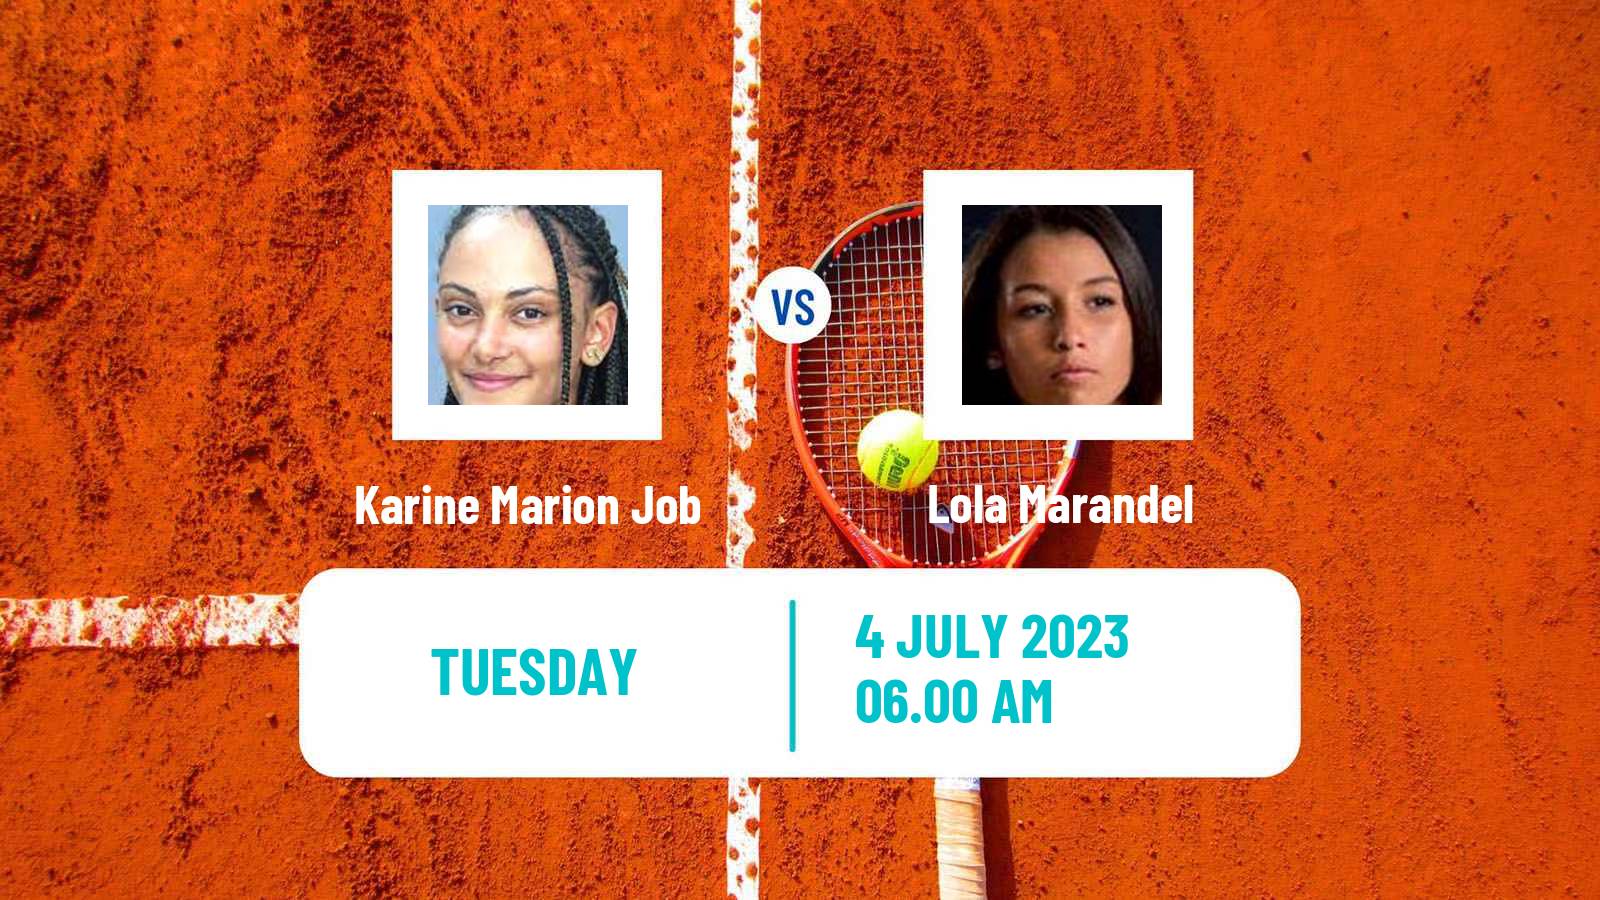 Tennis ITF W15 Monastir 22 Women Karine Marion Job - Lola Marandel